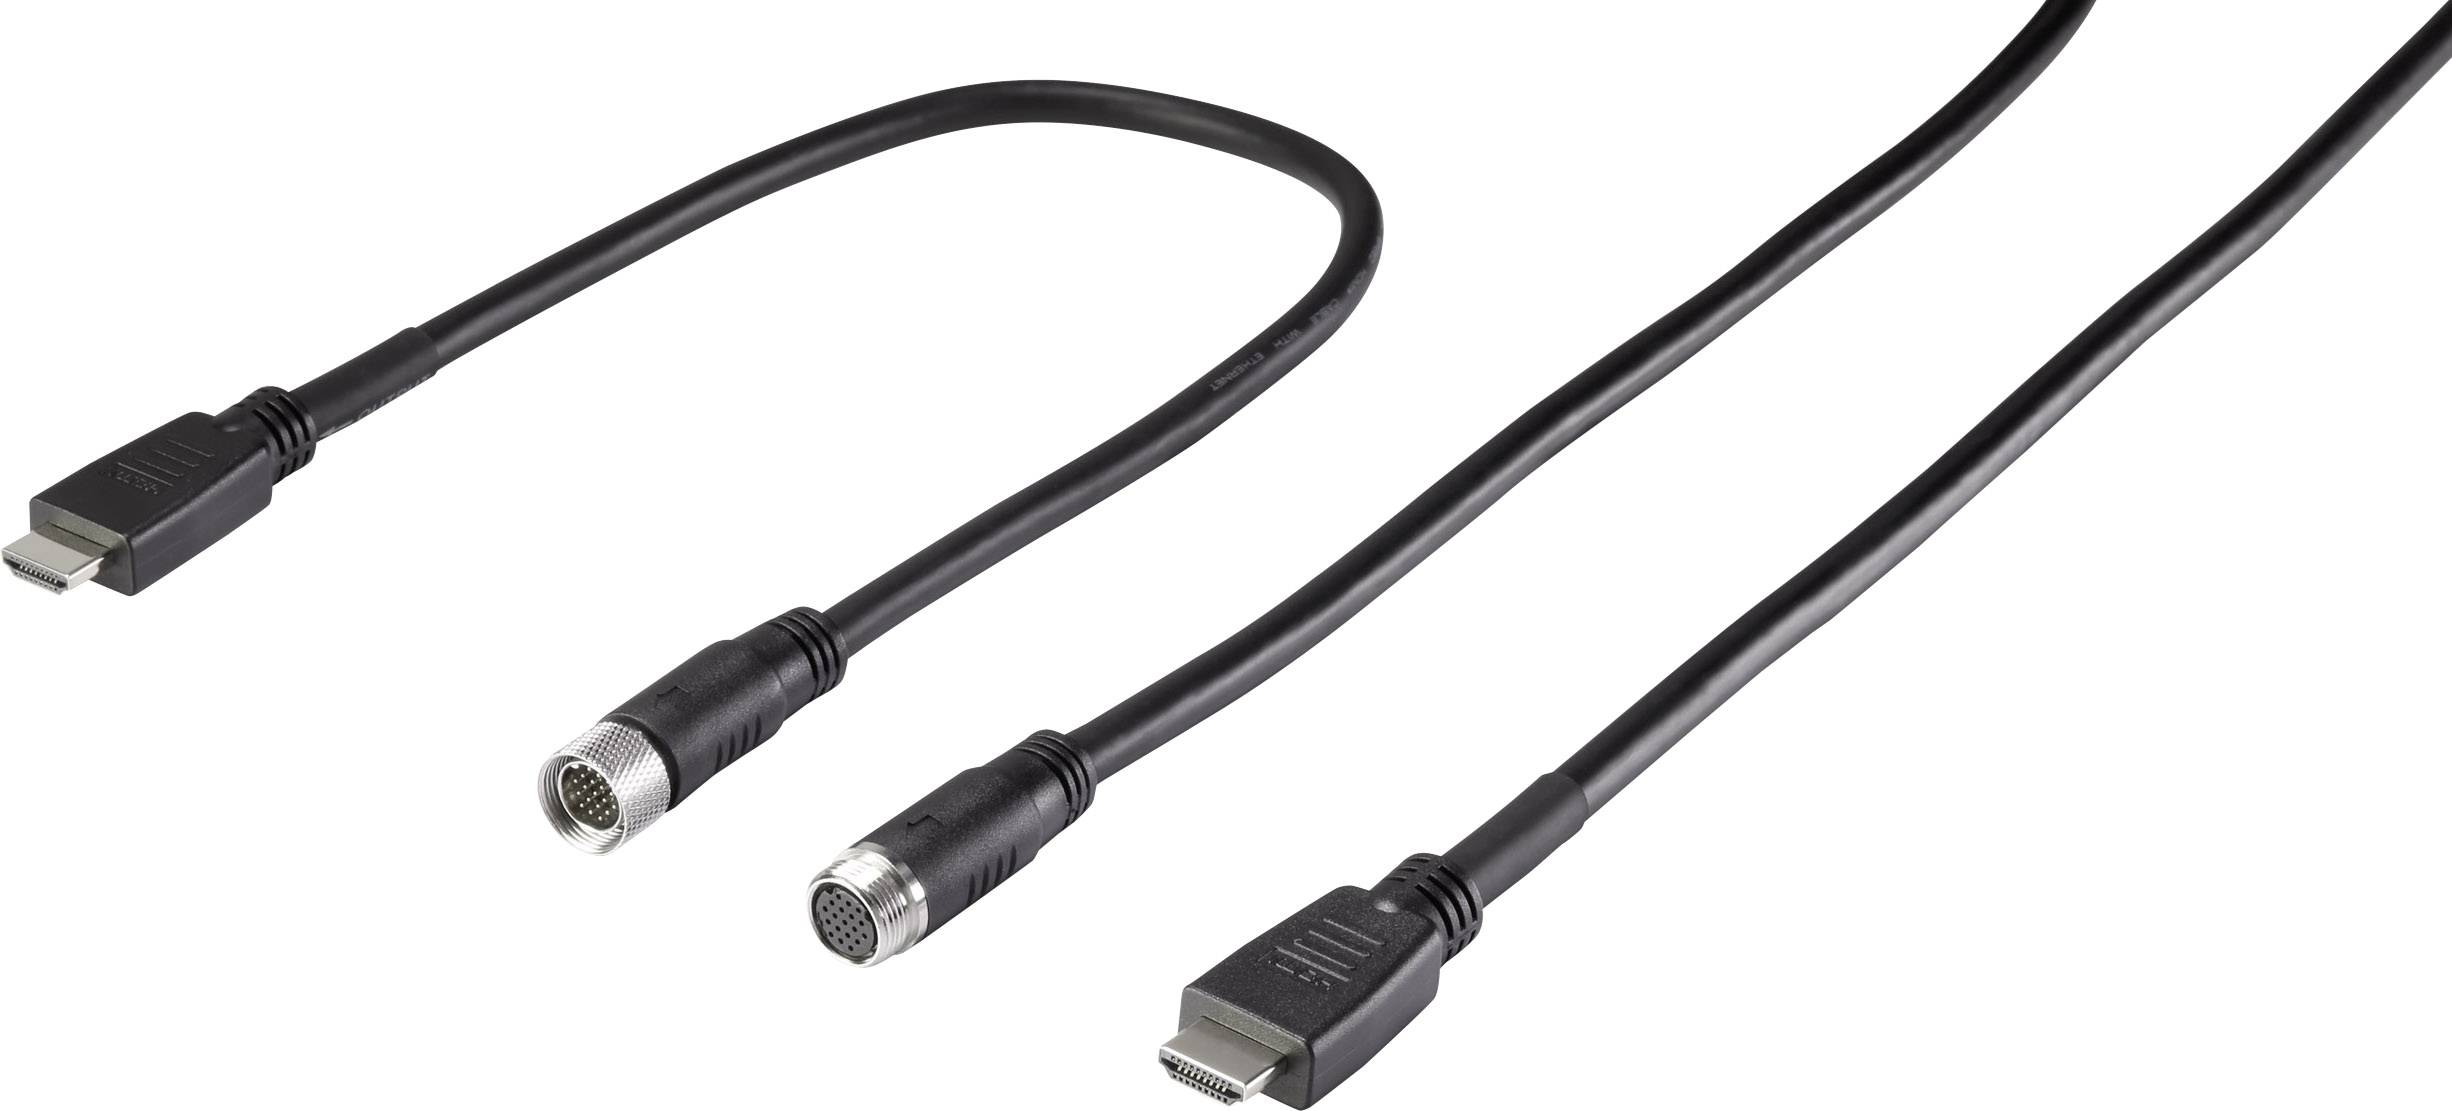 Renkforce Cable HDMI-A plug, HDMI-A 15.00 m Black for fitting, gold plated connectors HDMI | Conrad.com